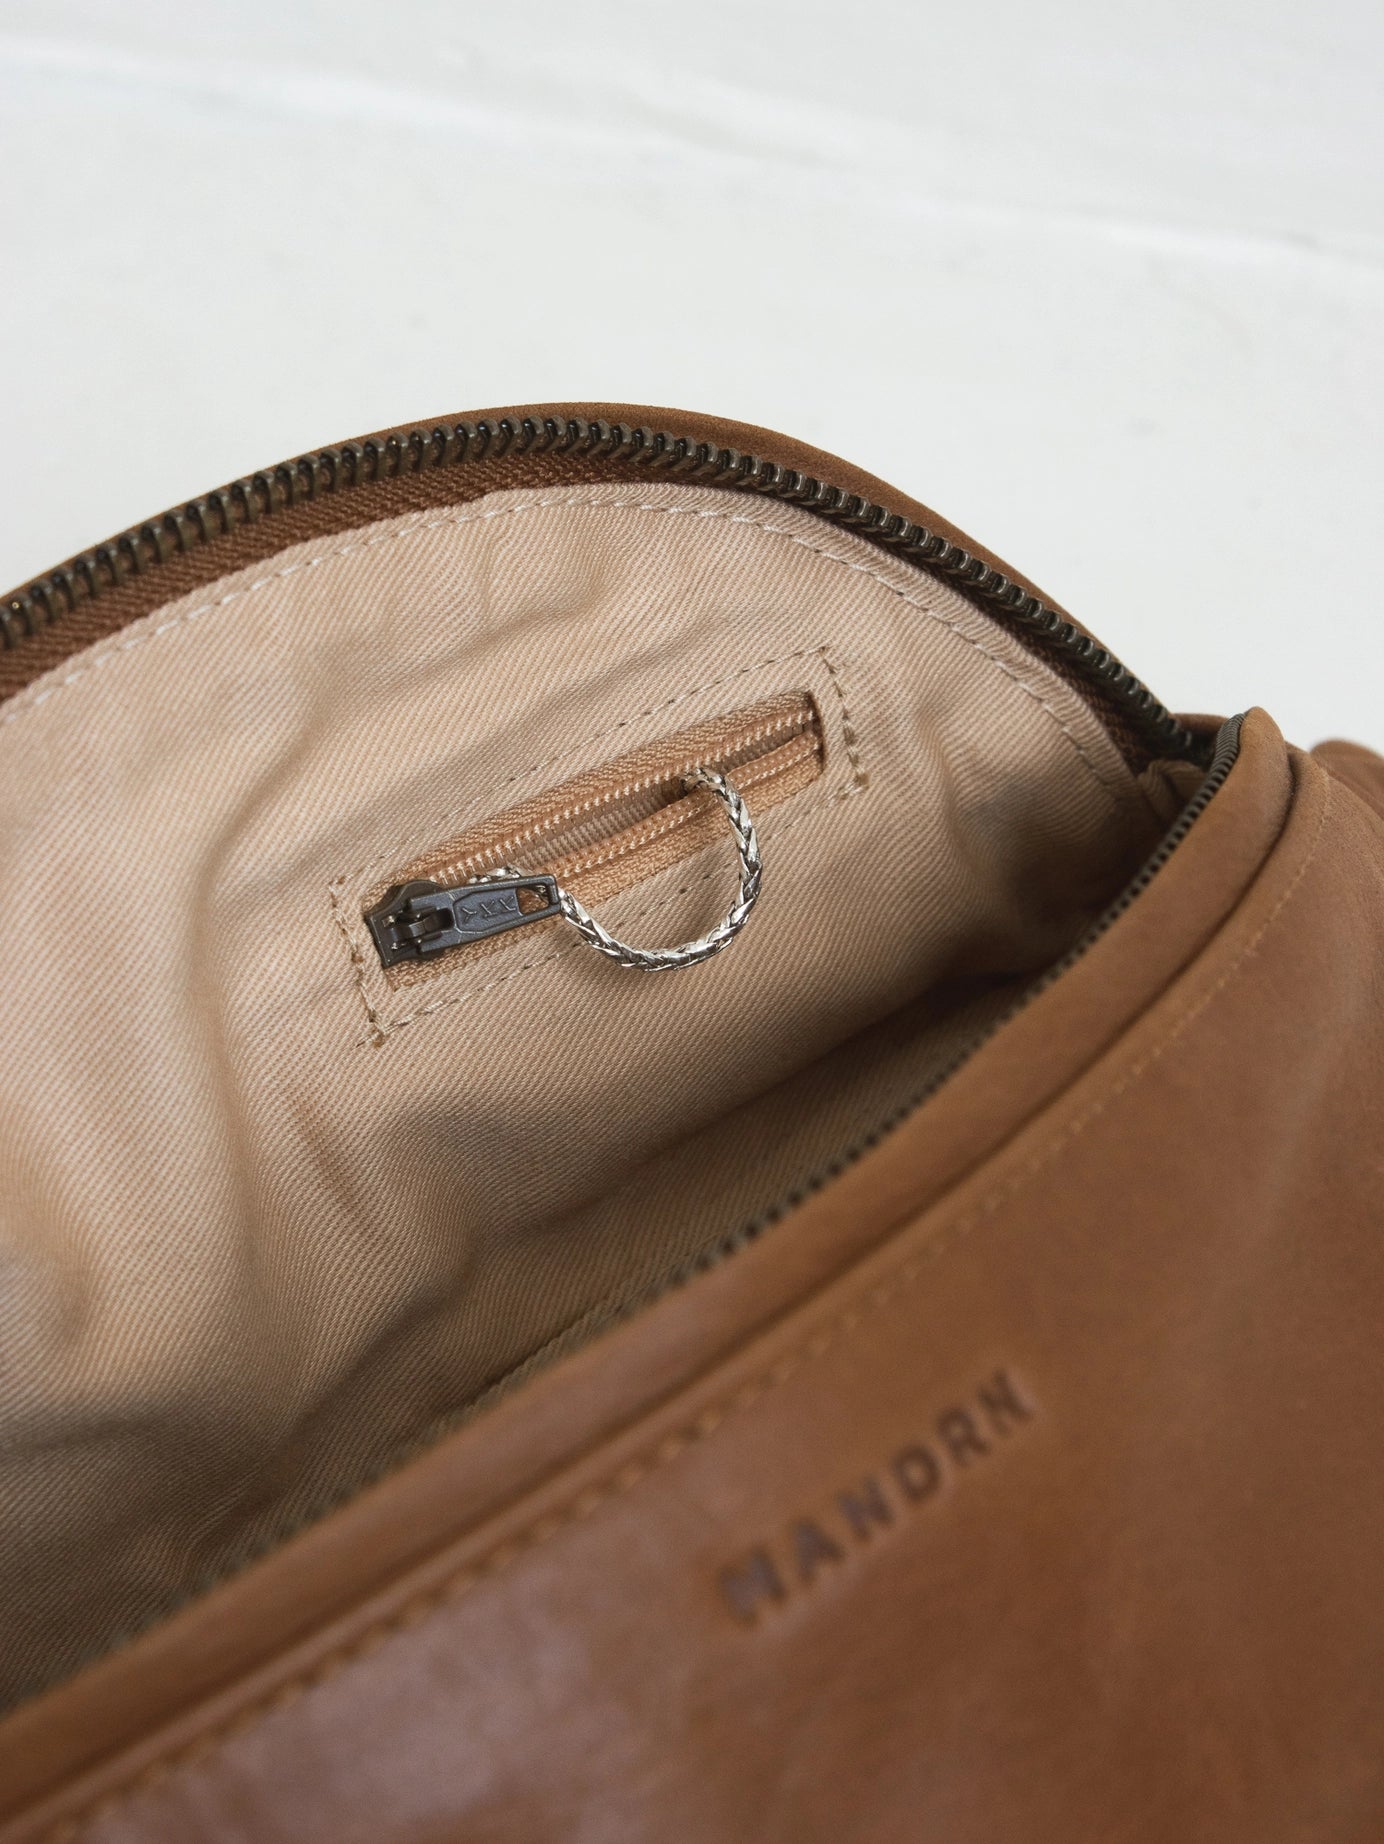 Zipper pocket Inside of mandrn atlas fanny pack in tan